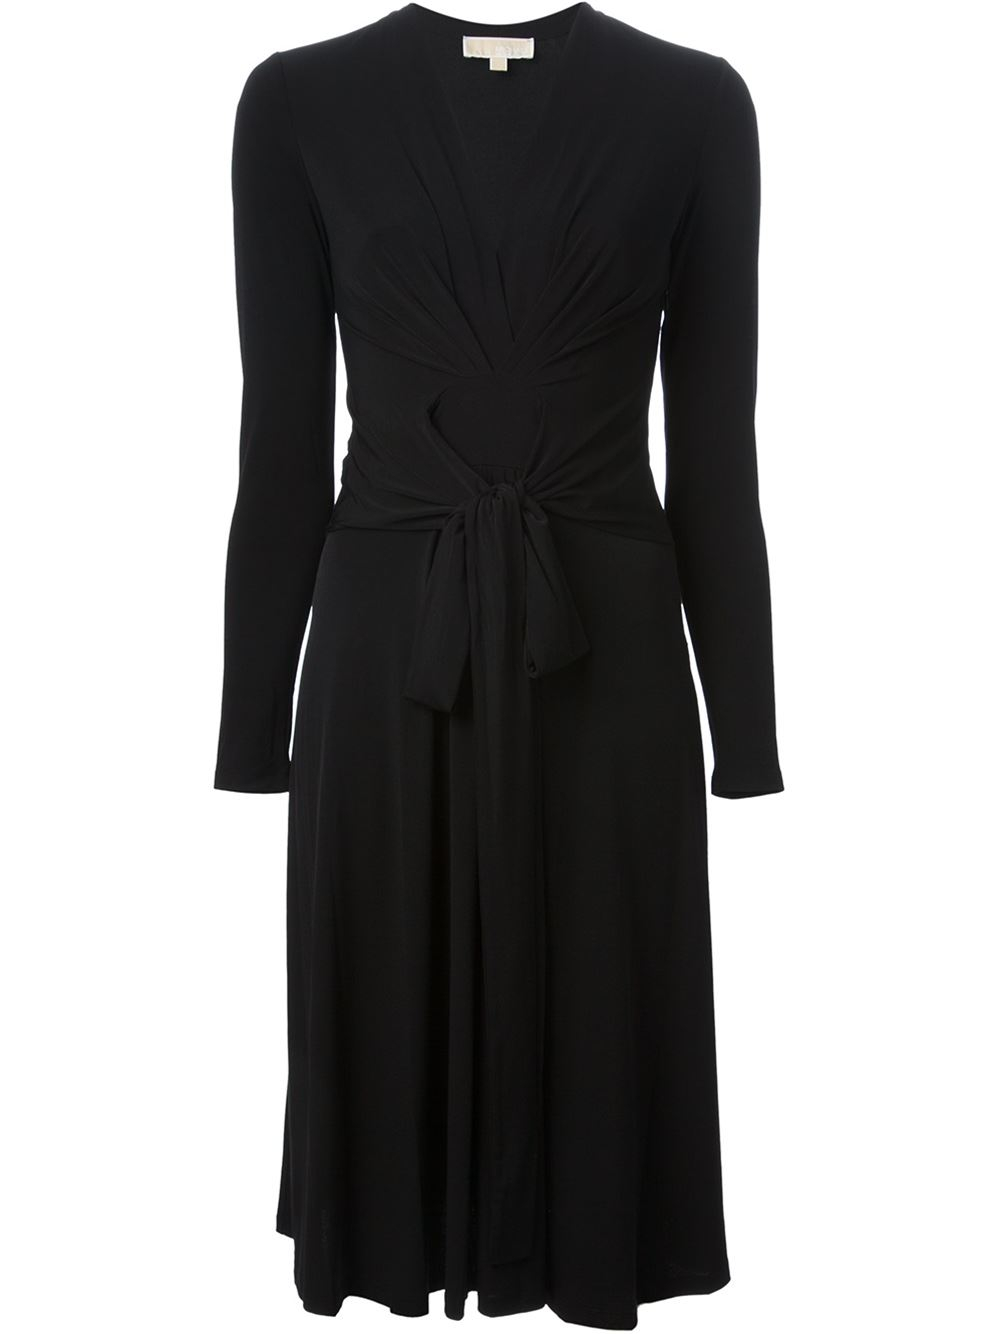 MICHAEL Michael Kors Wrap Dress in Black - Lyst